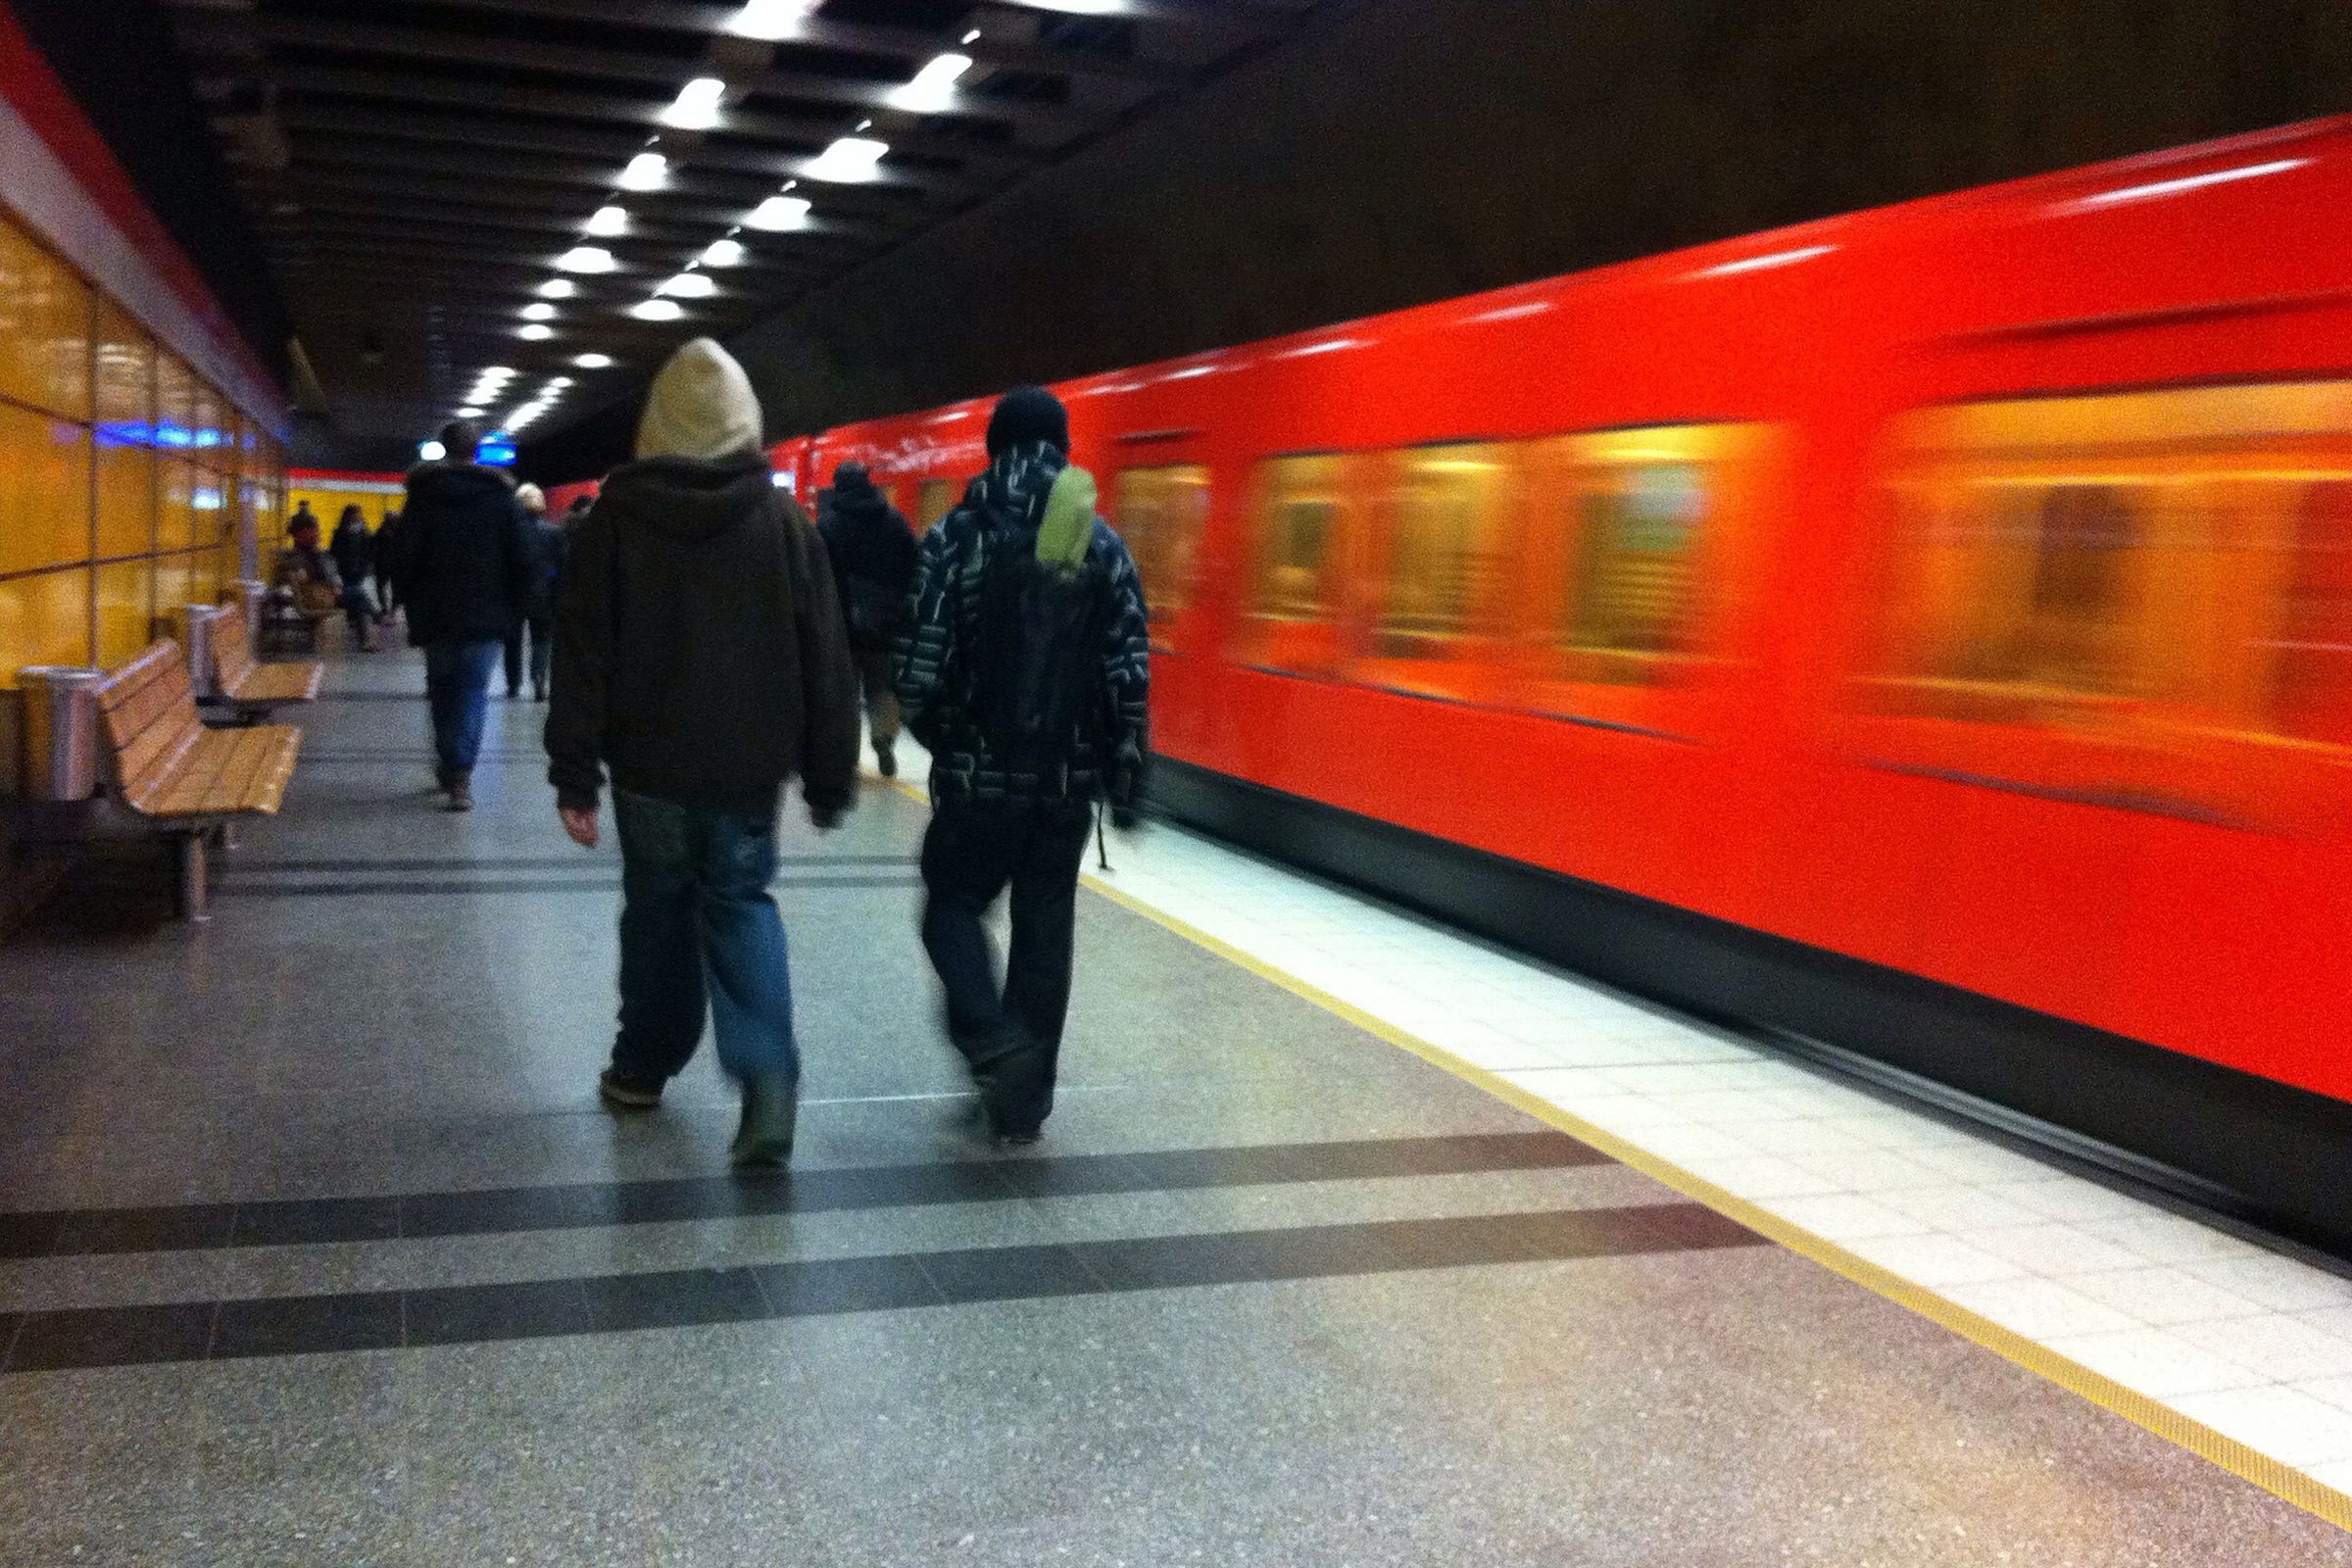 Commuters walk through a Helsinki Metro station as a train passes